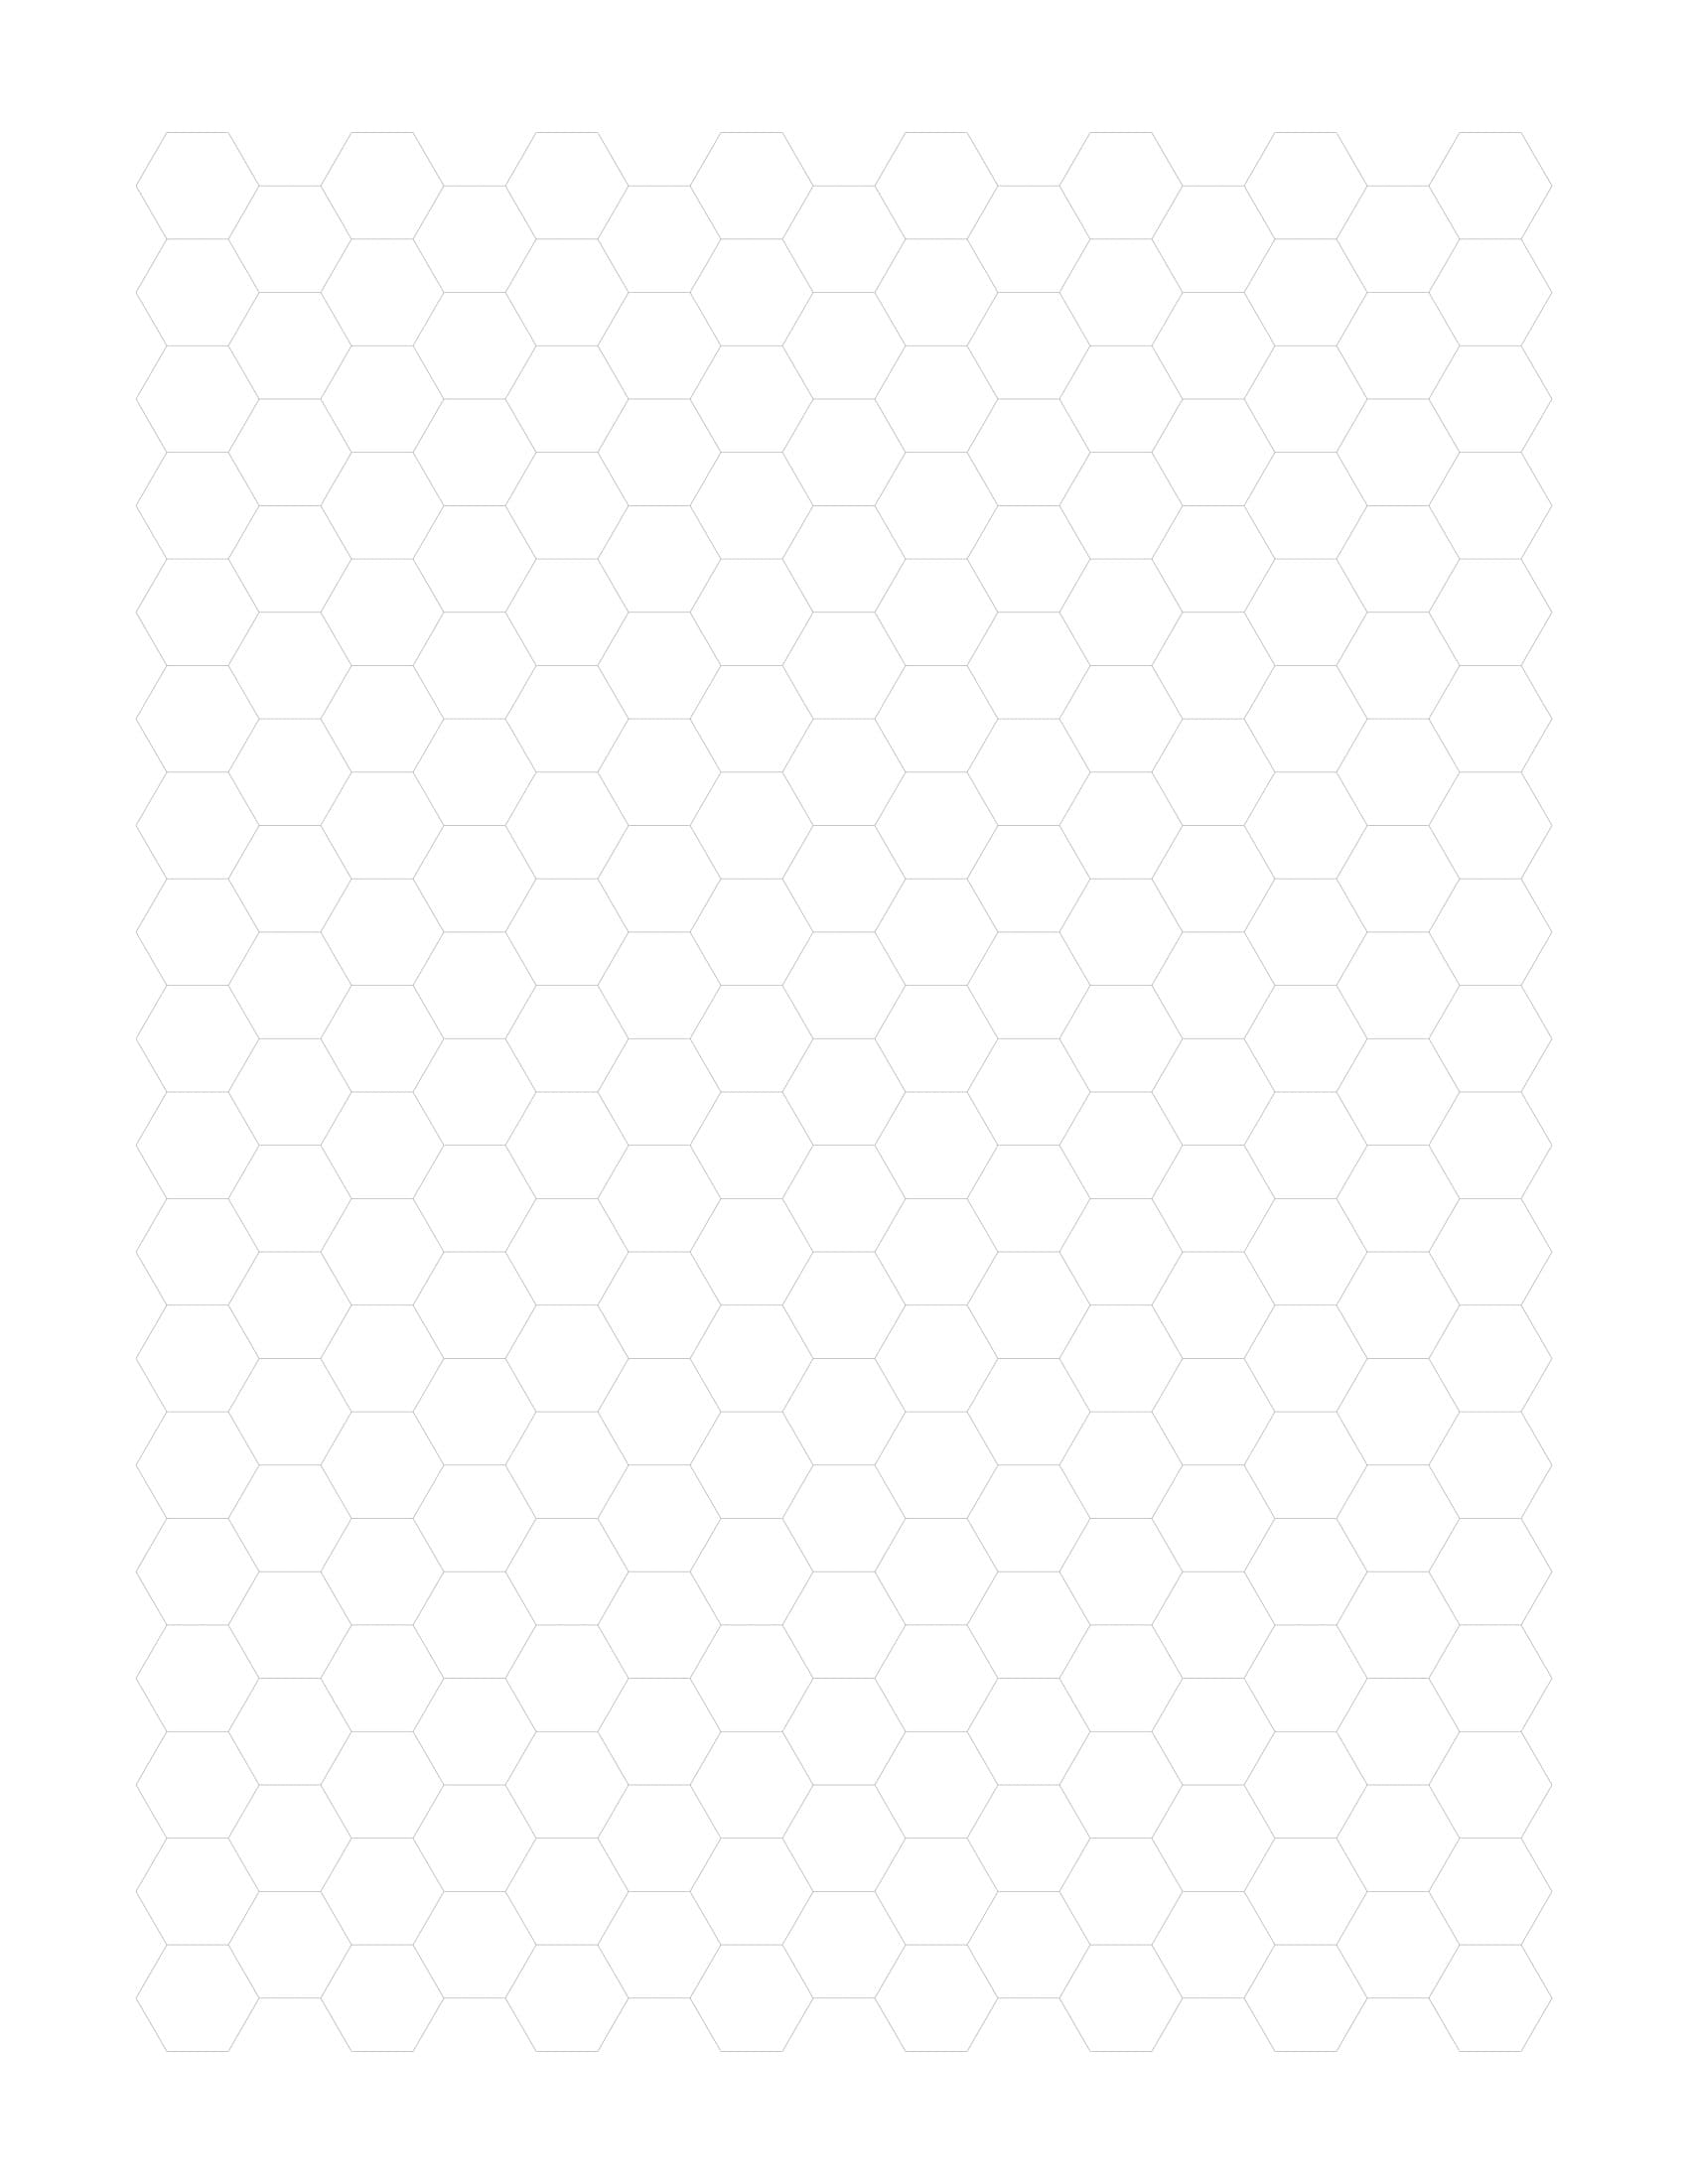 Free Printable Hexagon Graph Paper